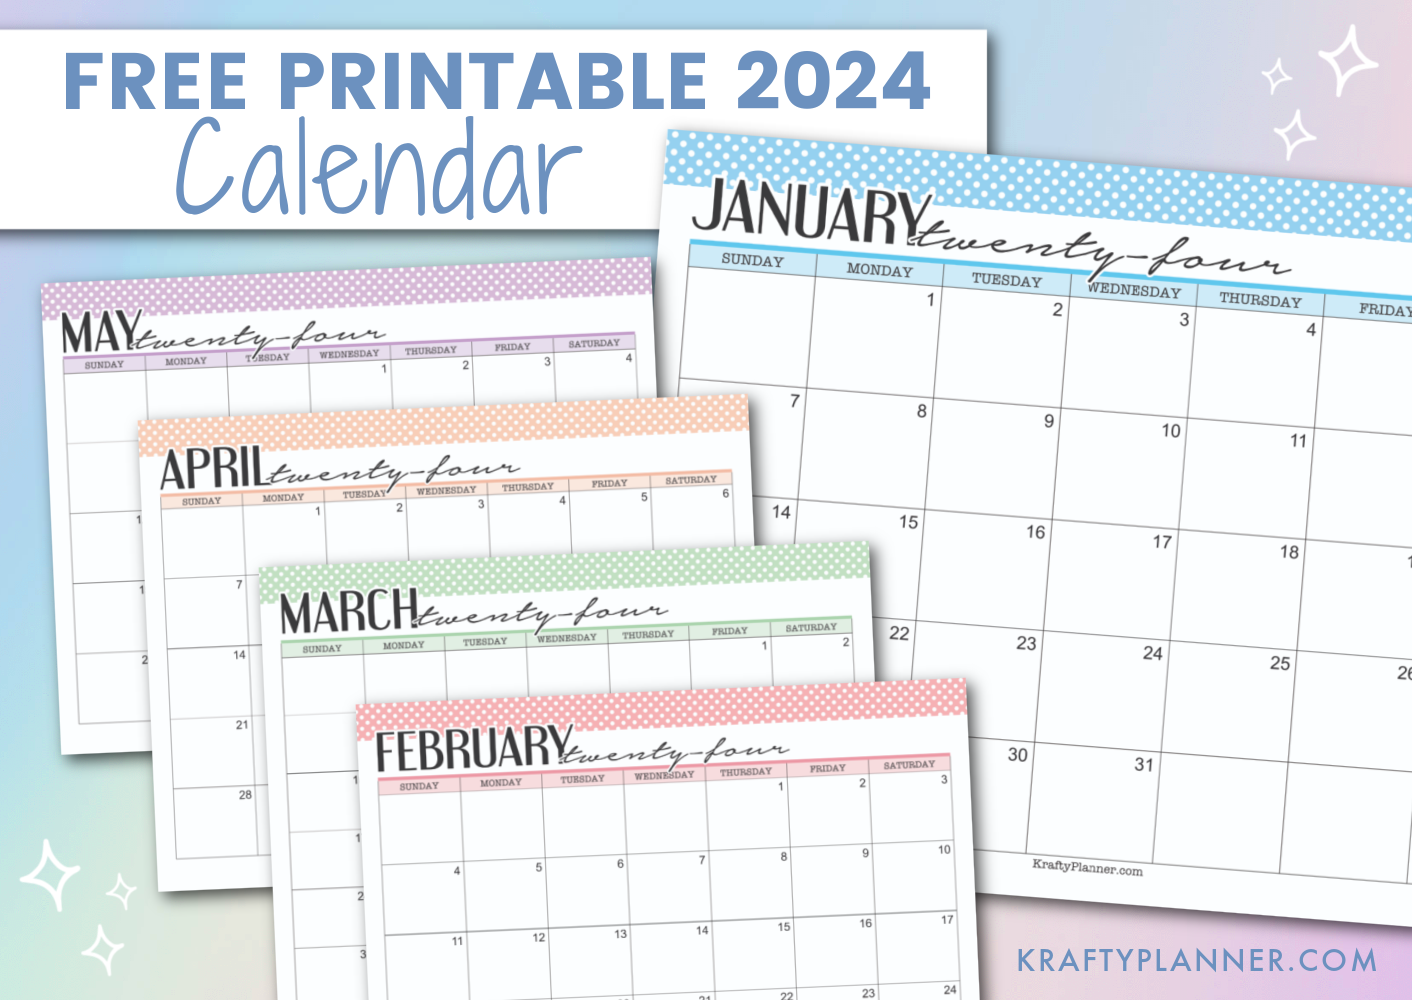 Free Printable 2024 Calendars (Color) — Krafty Planner for Coloring Calendar 2024 Printable